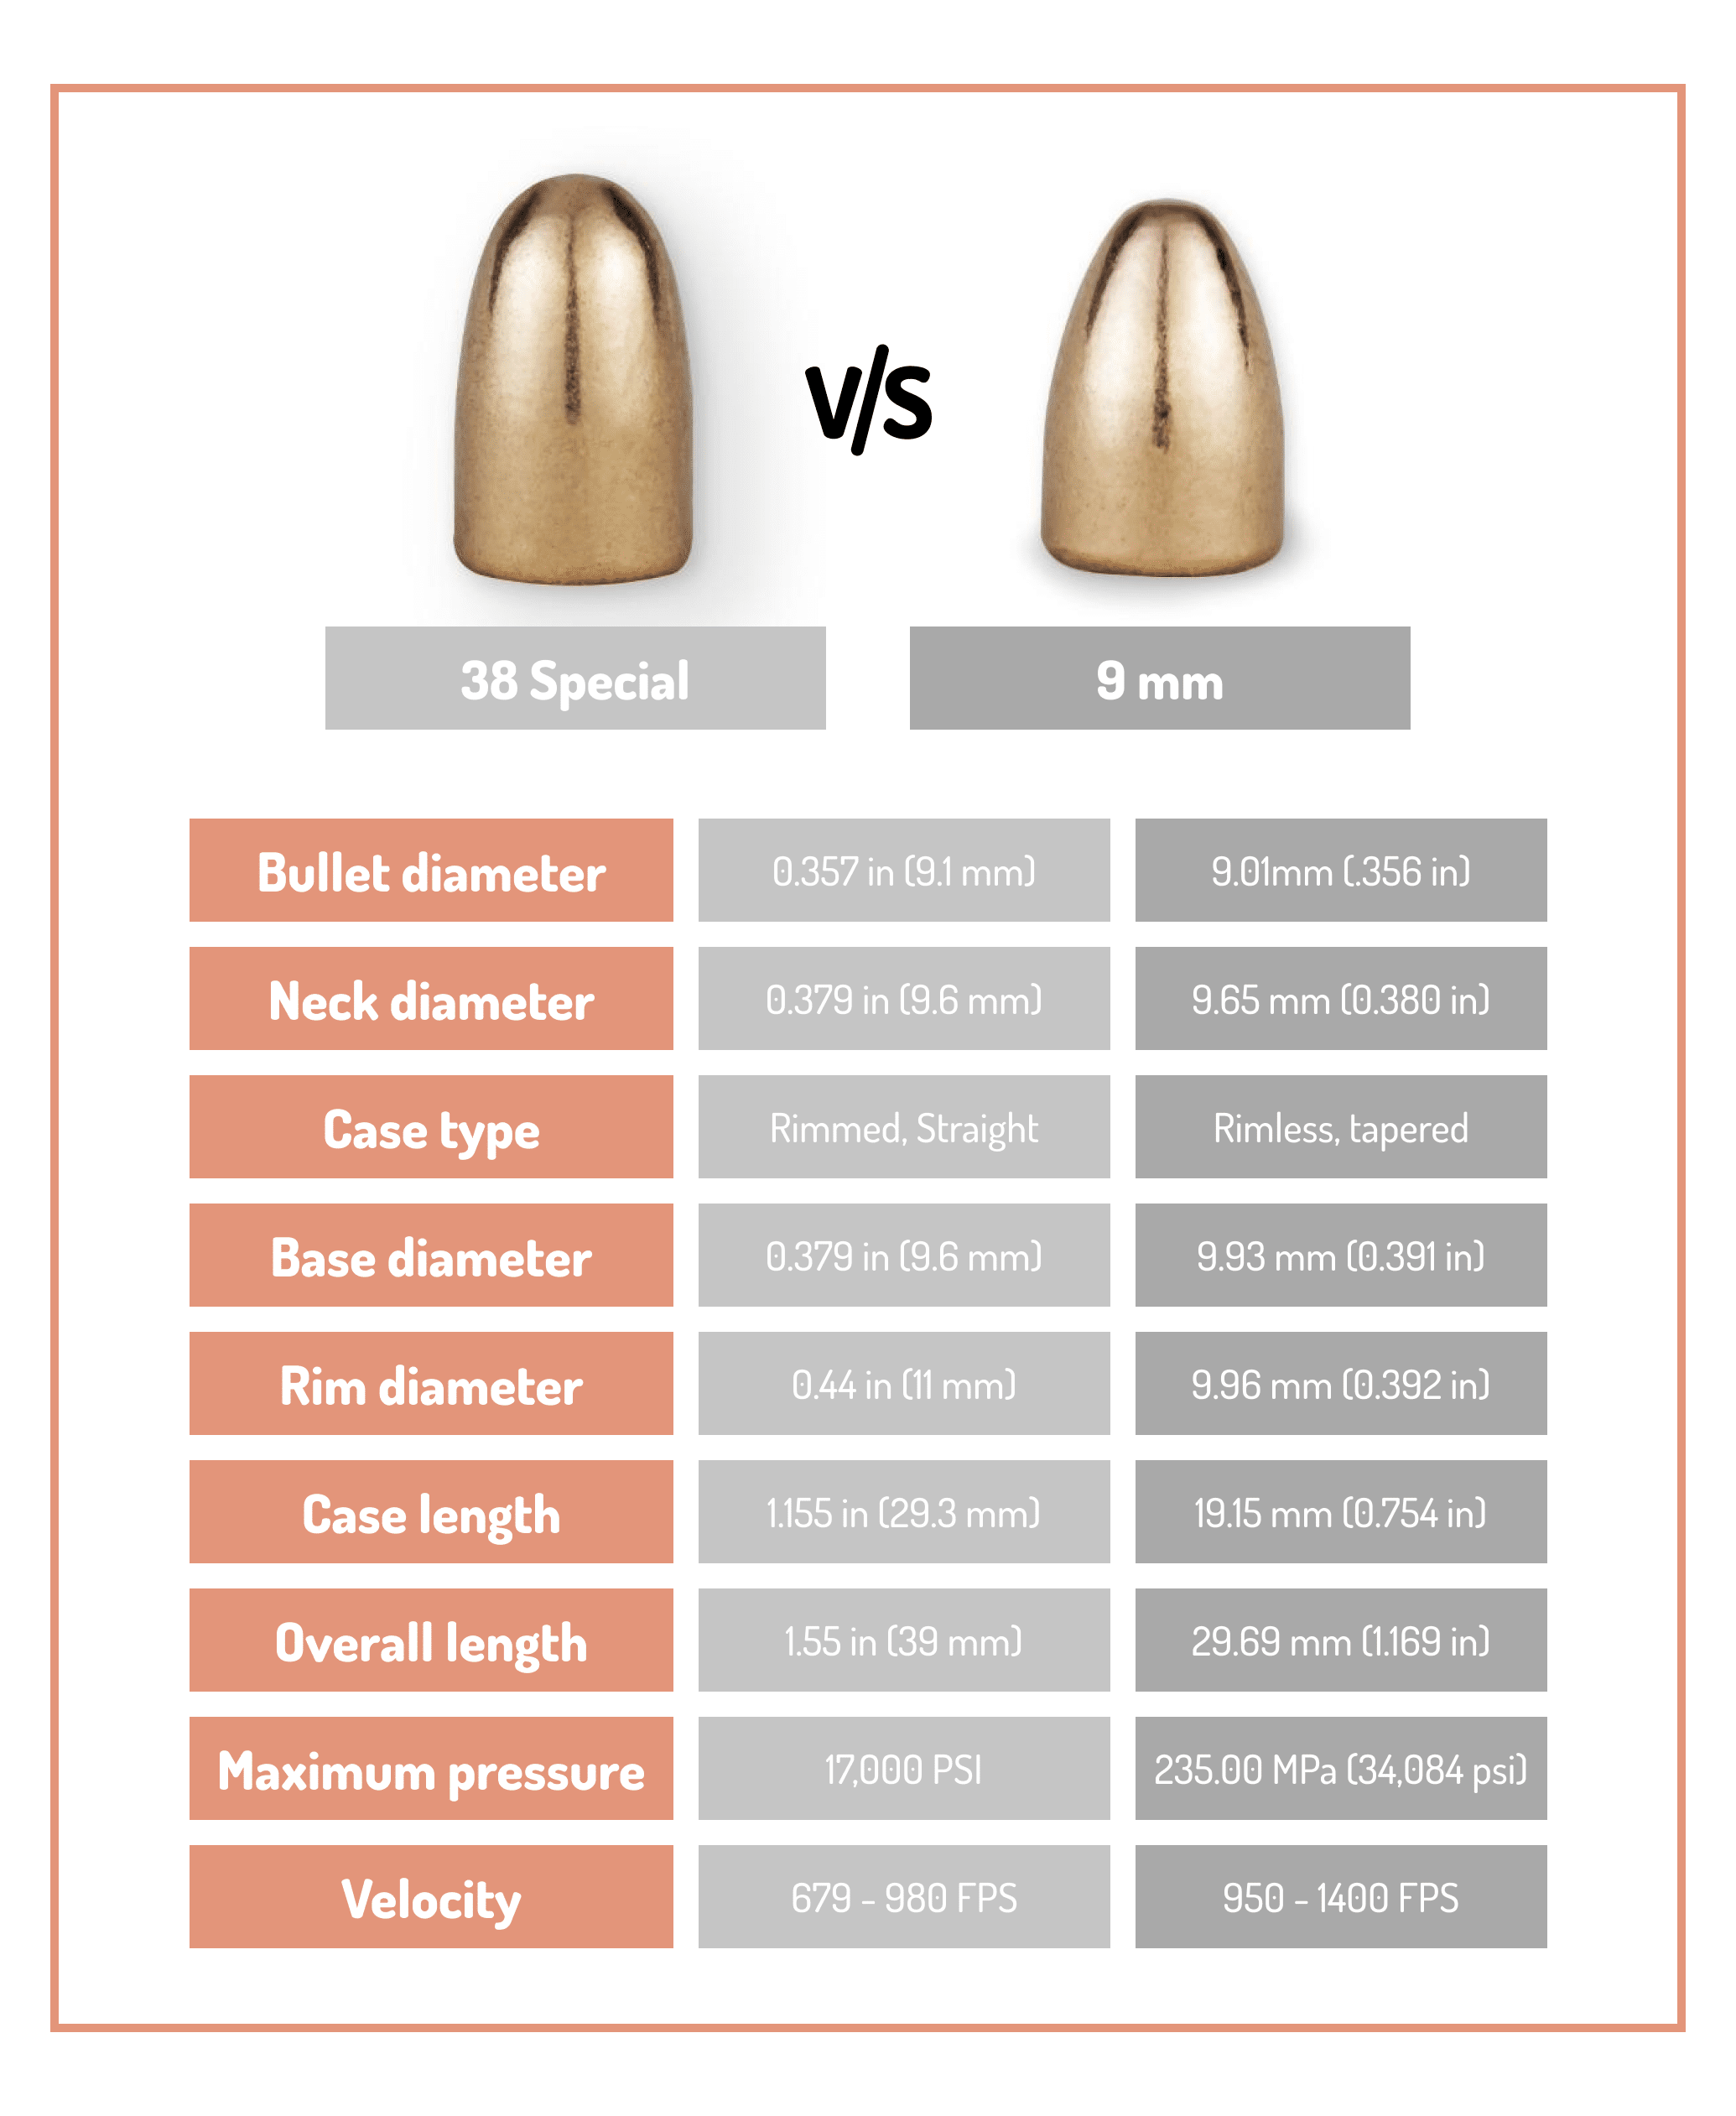 Factors that Influence Bullet Performance